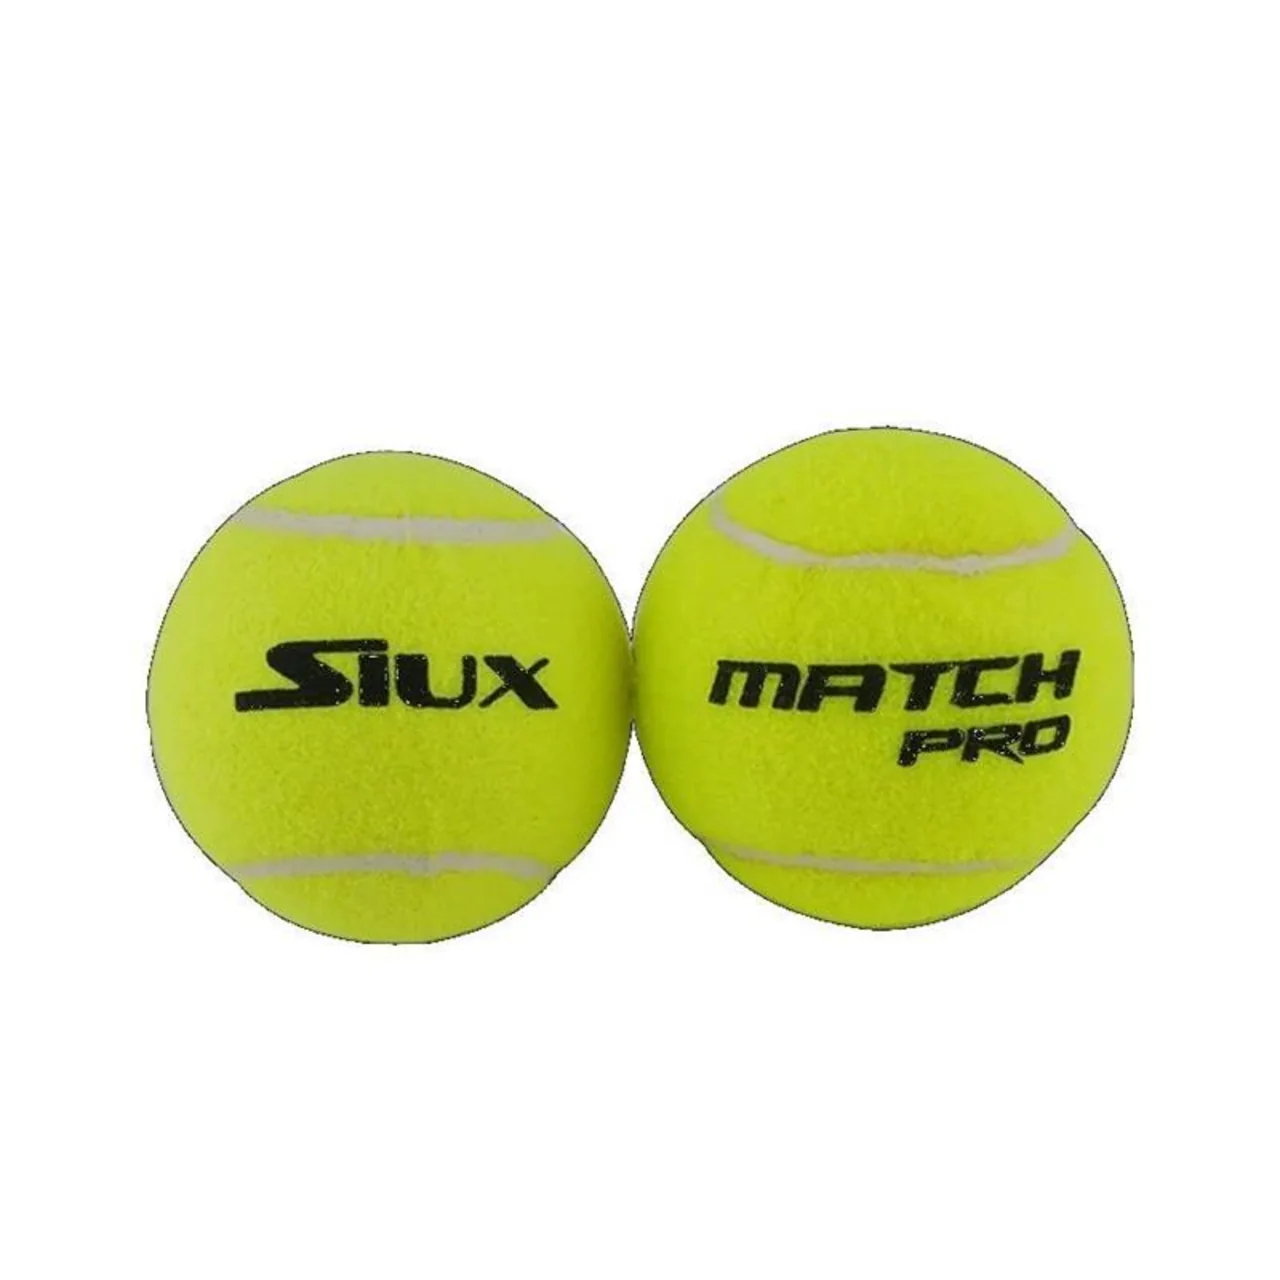 Siux Match Pro 24 rör